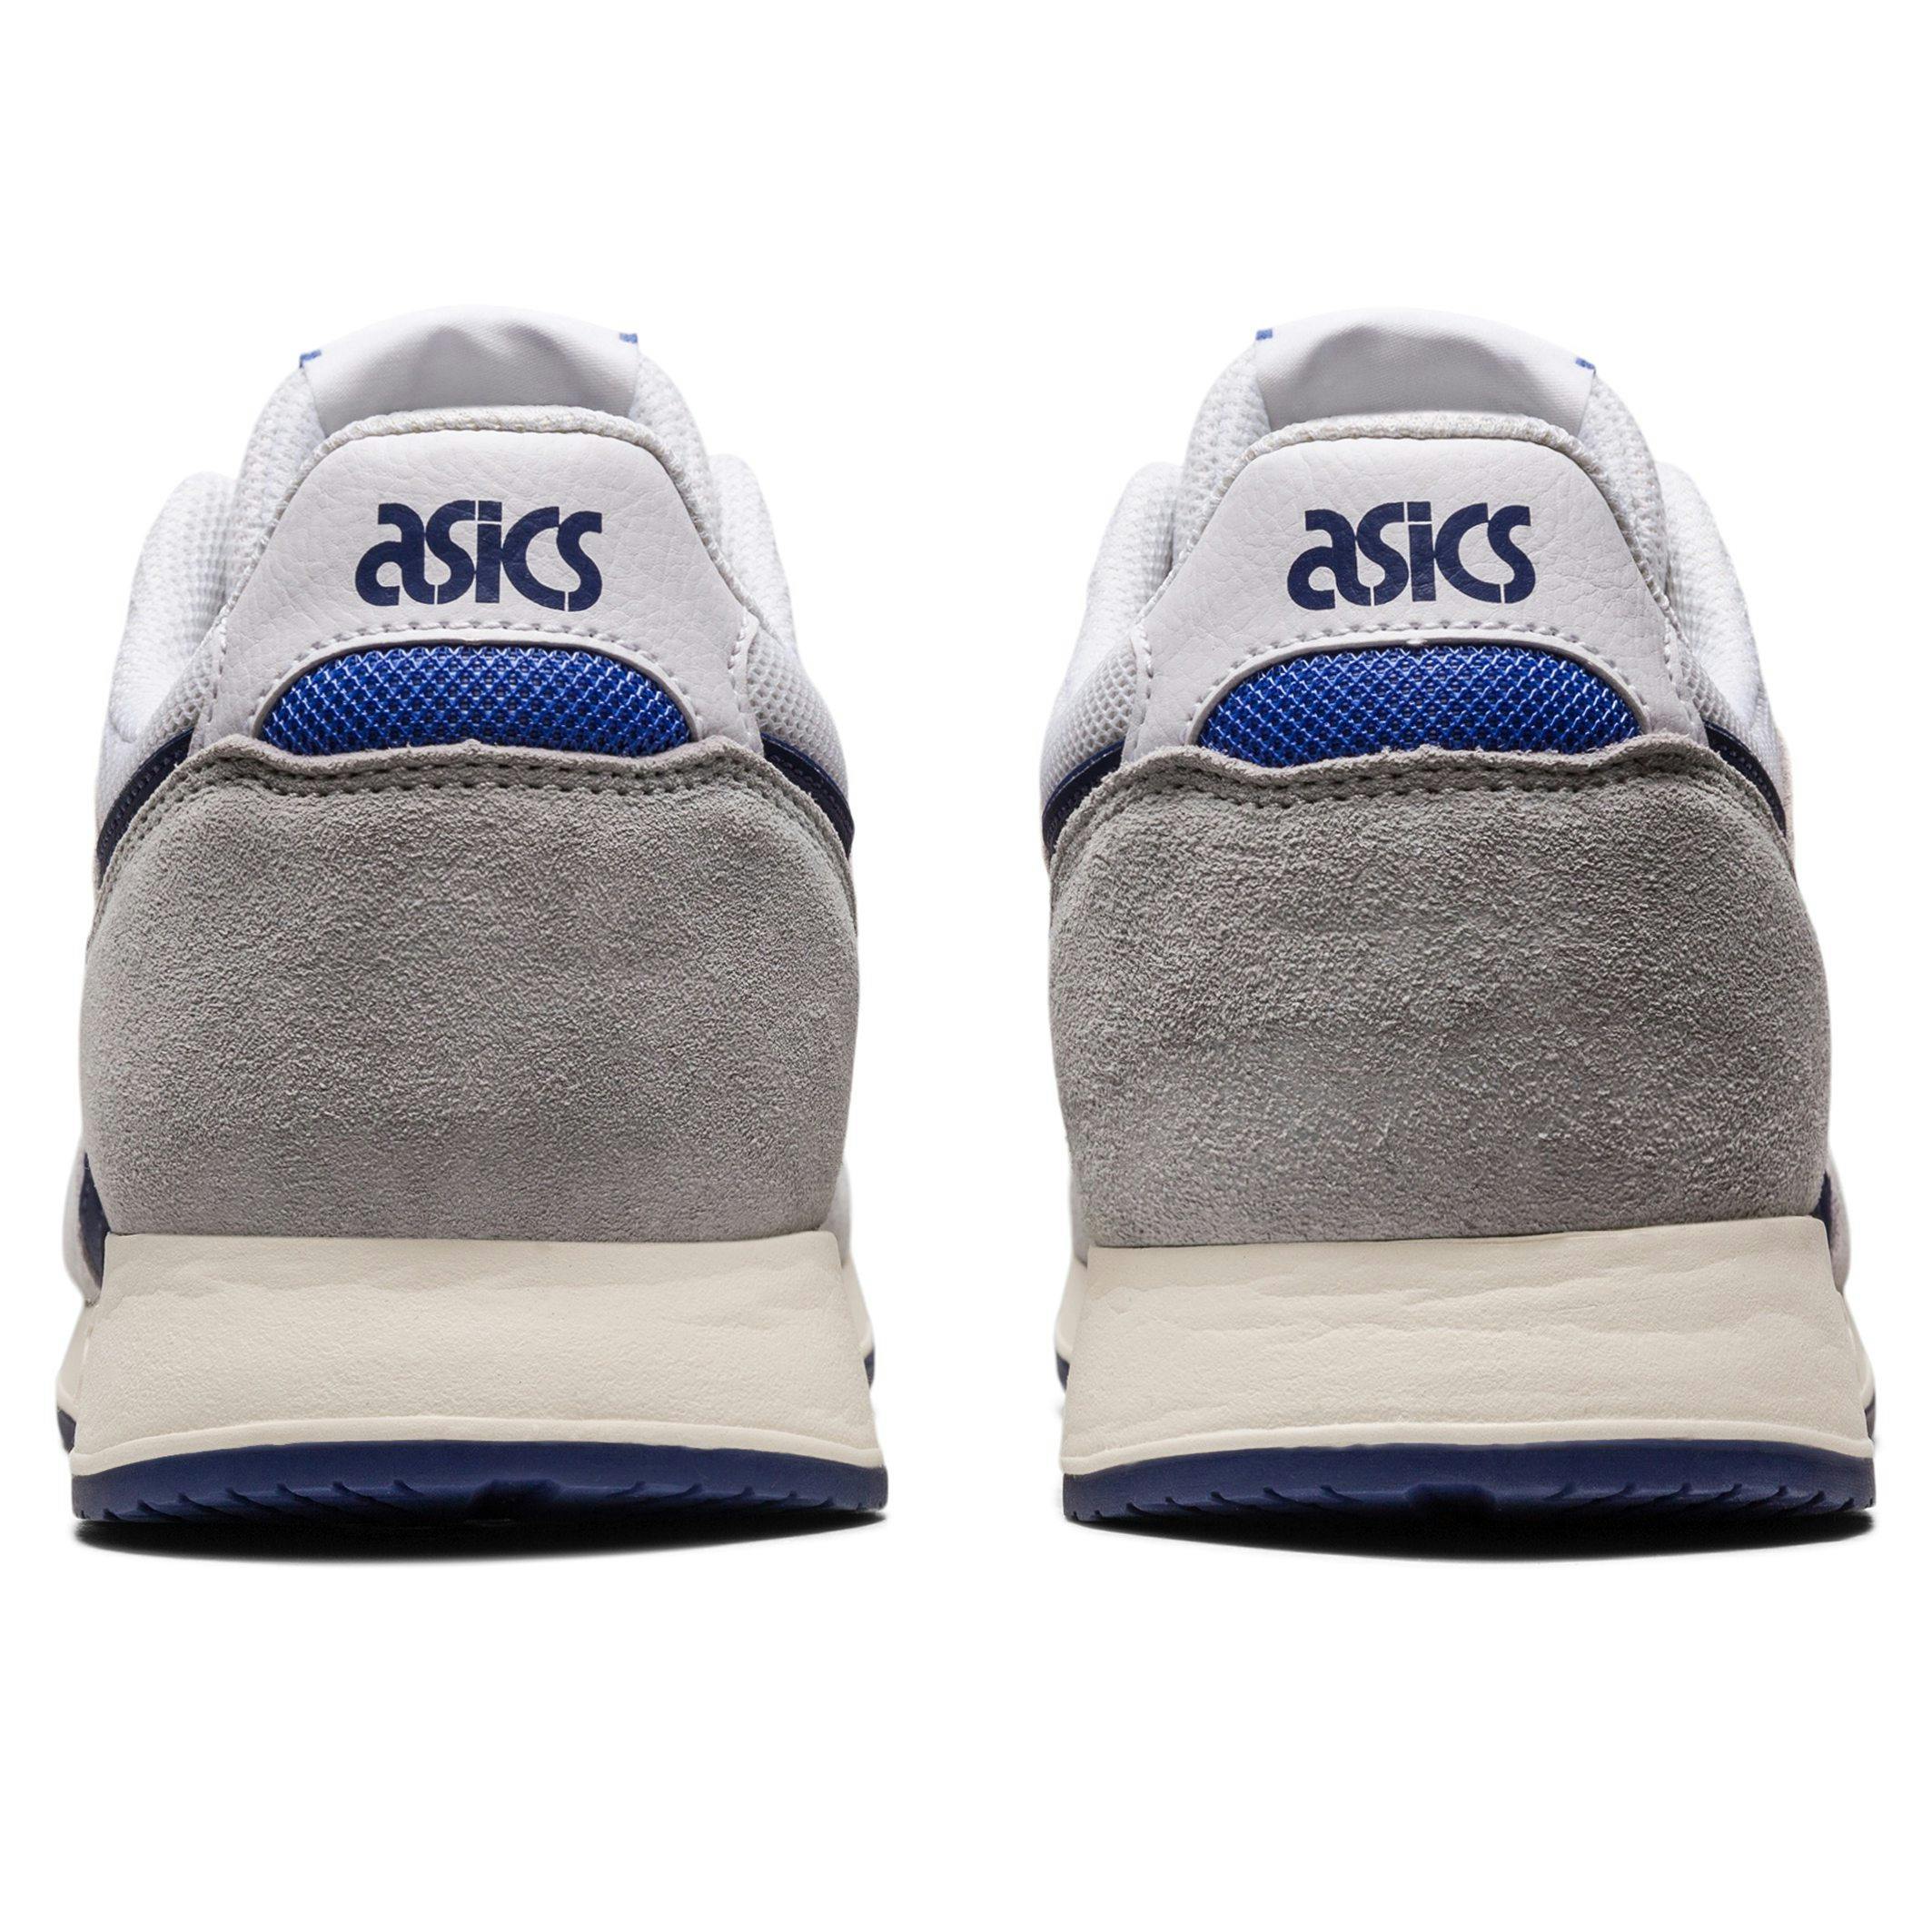 Lyte Blue White/Indigo Asics - Huckberry Casual Classic Sneaker | Sneakers |